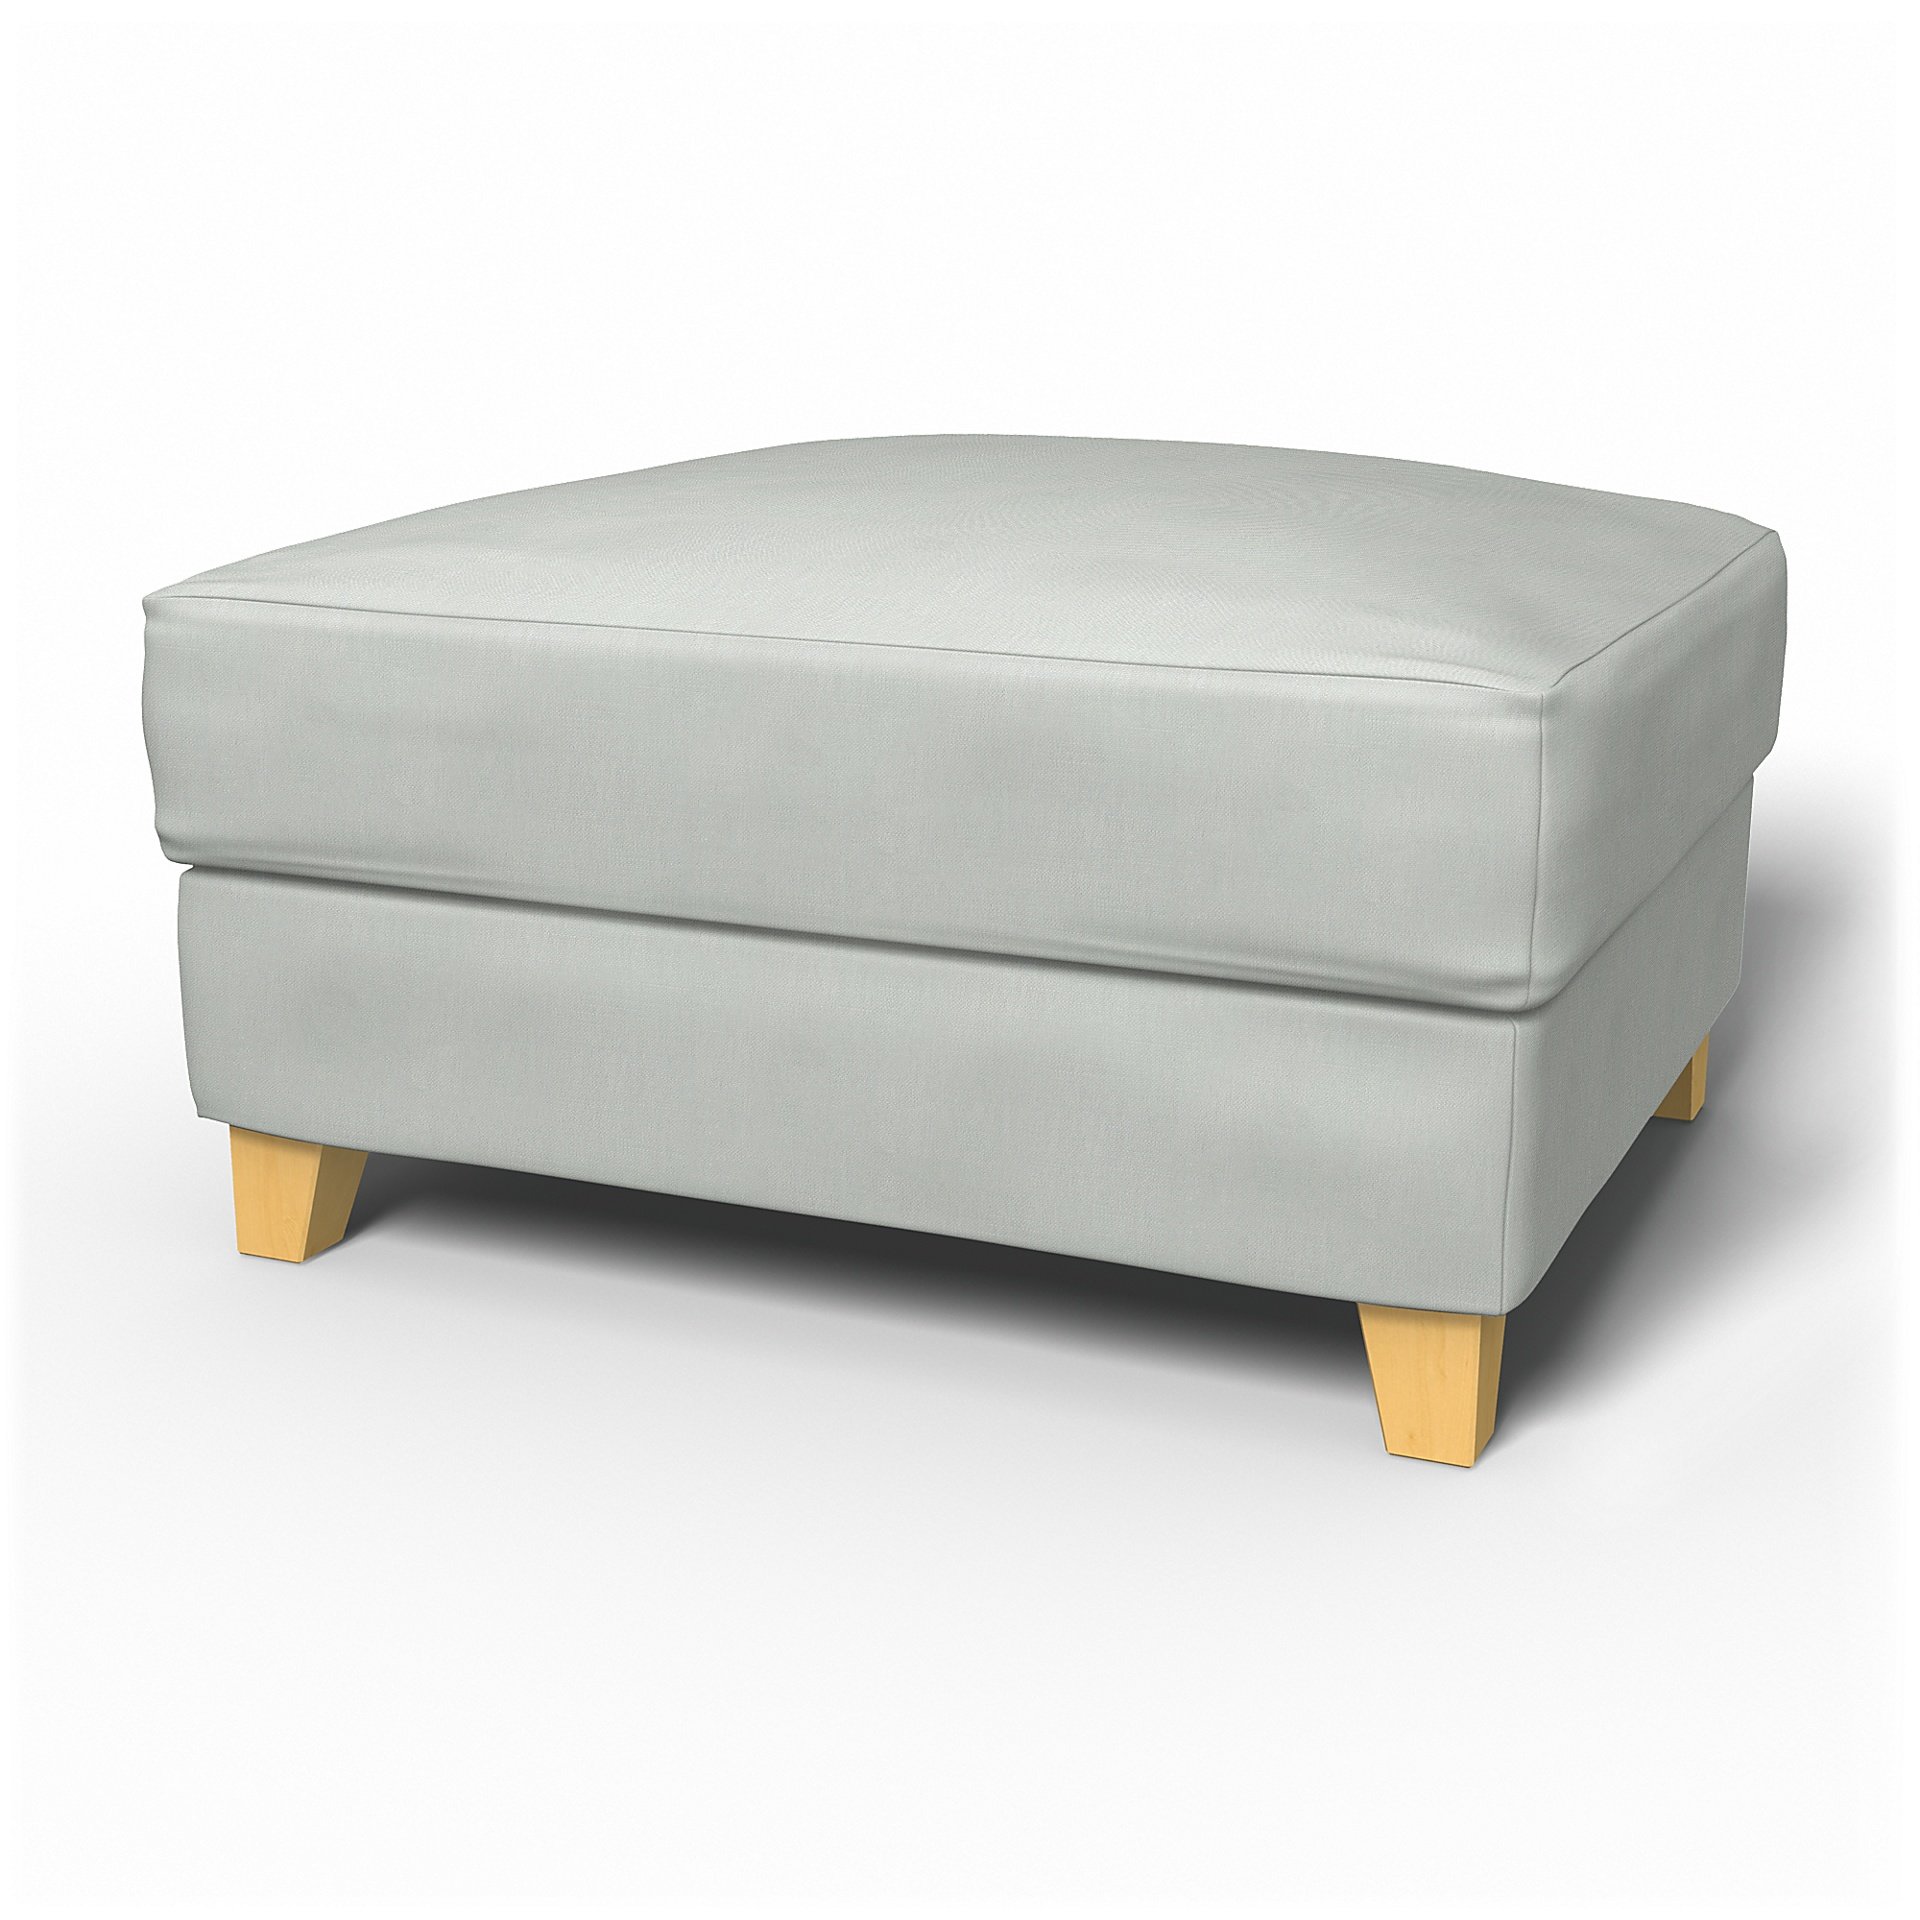 IKEA - Backa Footstool Cover, Silver Grey, Linen - Bemz